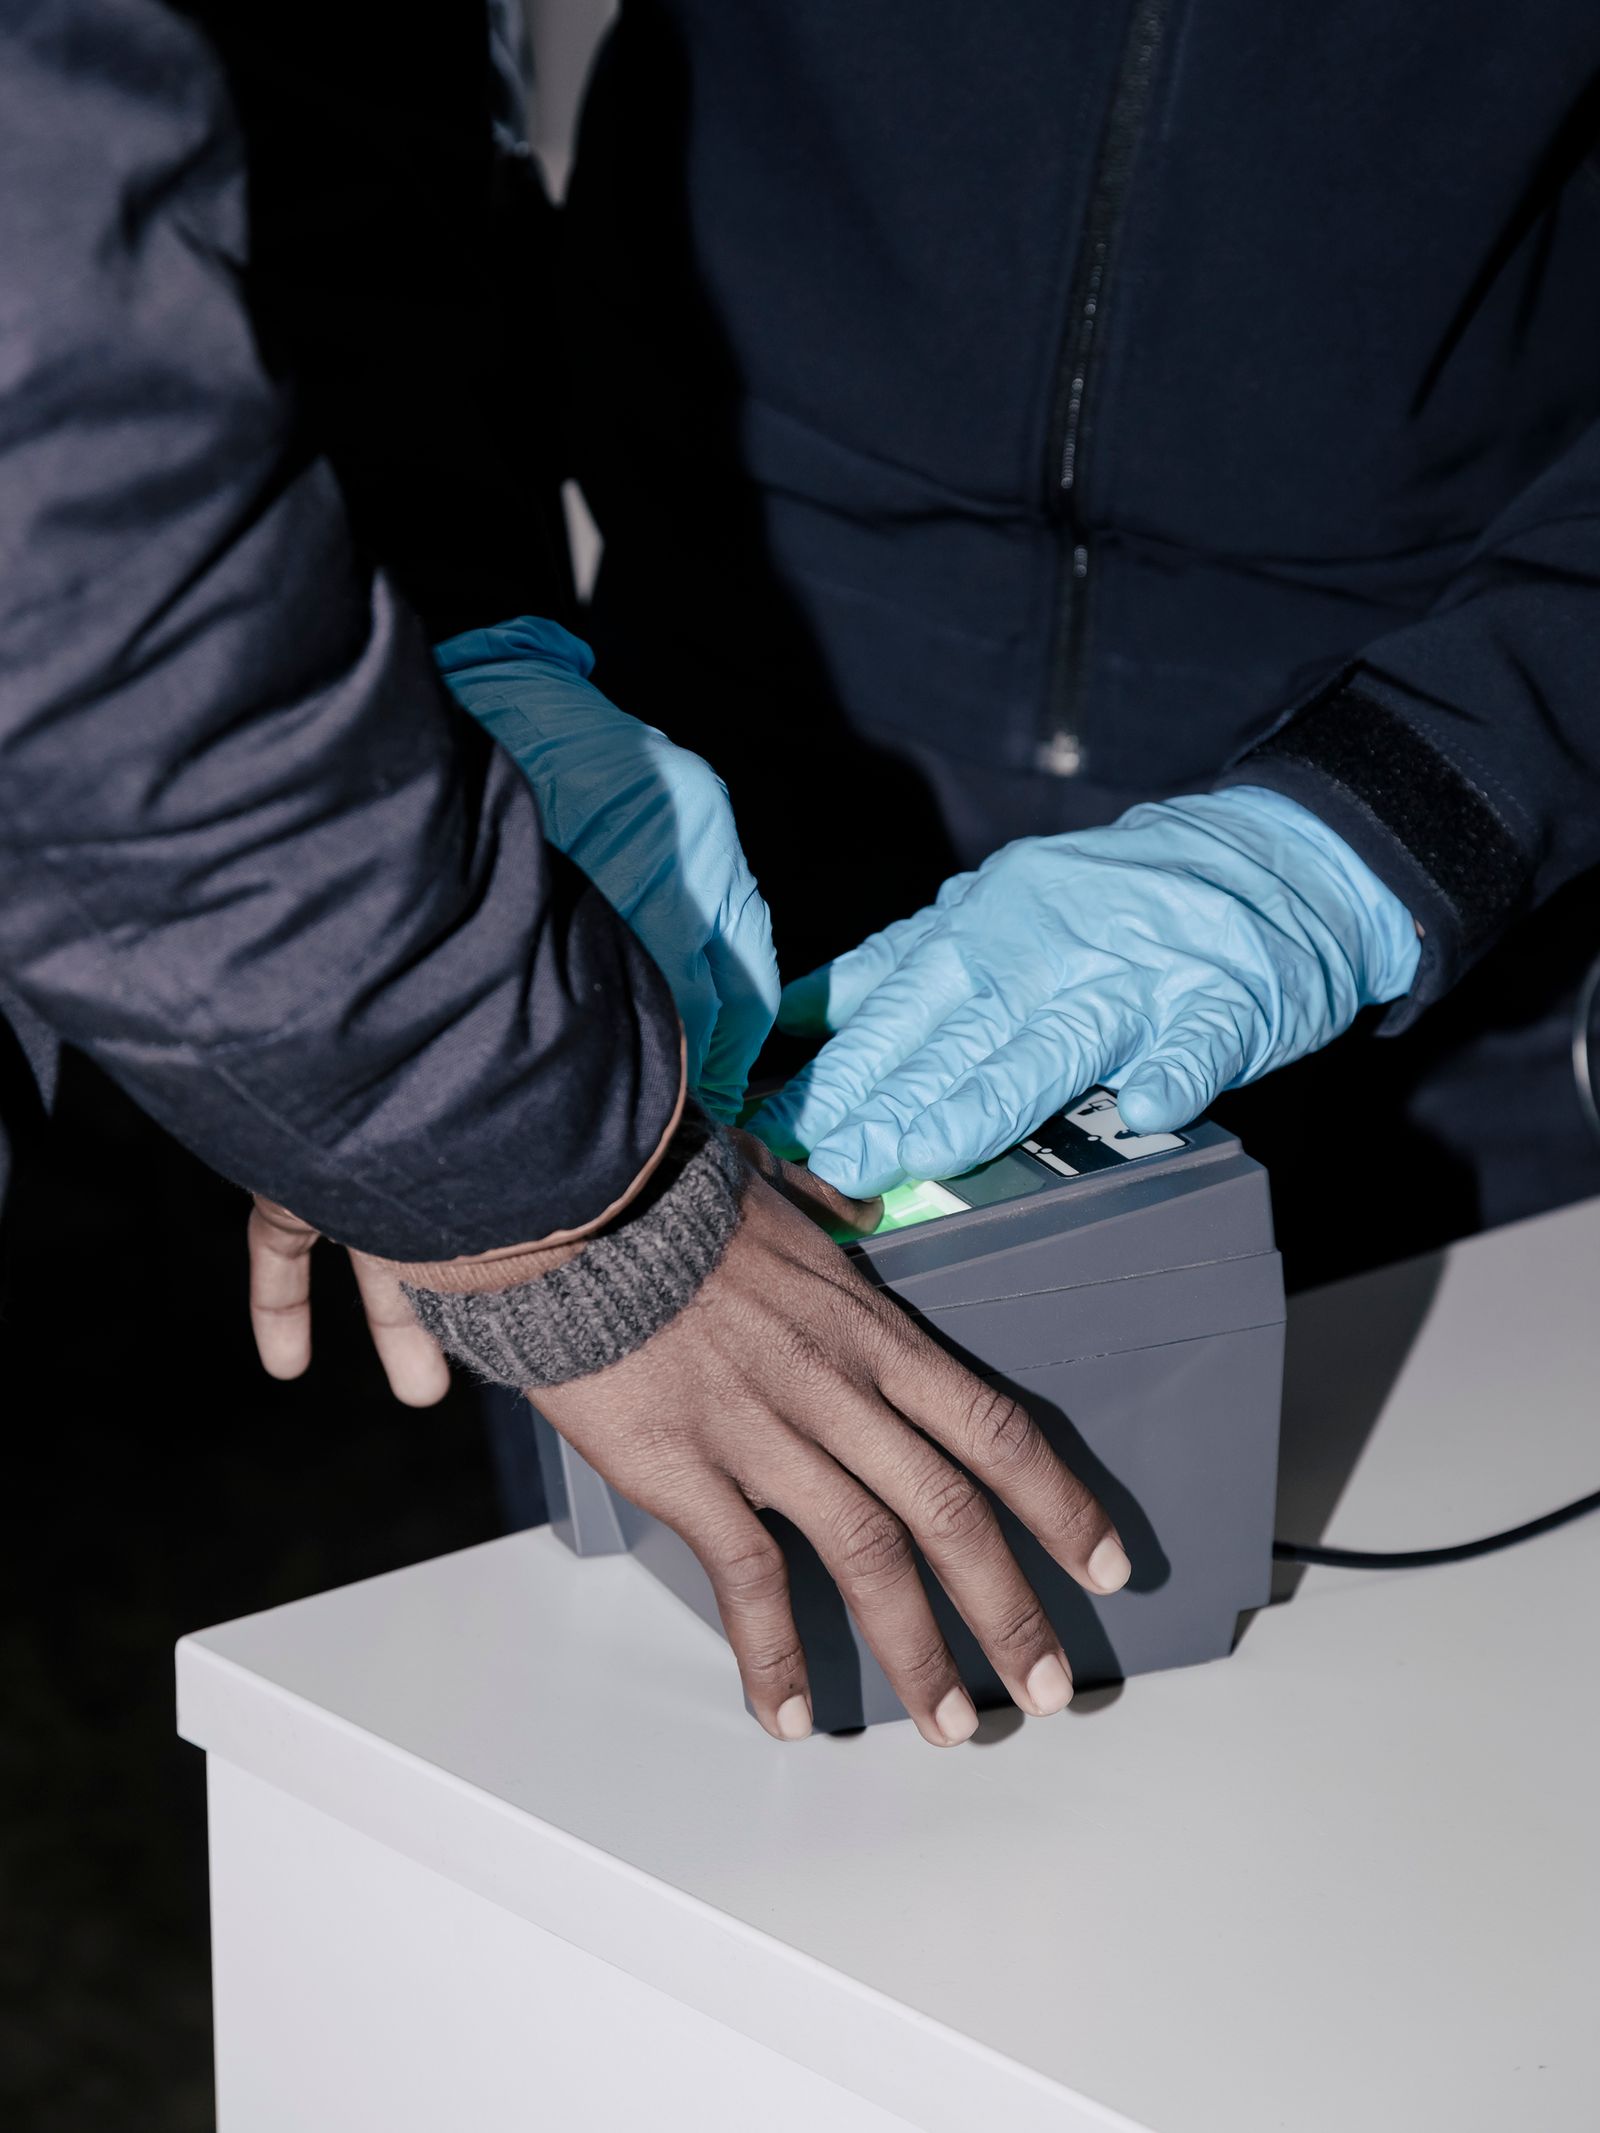 © Salvatore Vitale - Fingerprint registration during an immigration control at the Italian border for an Eritrean asylum seeker.